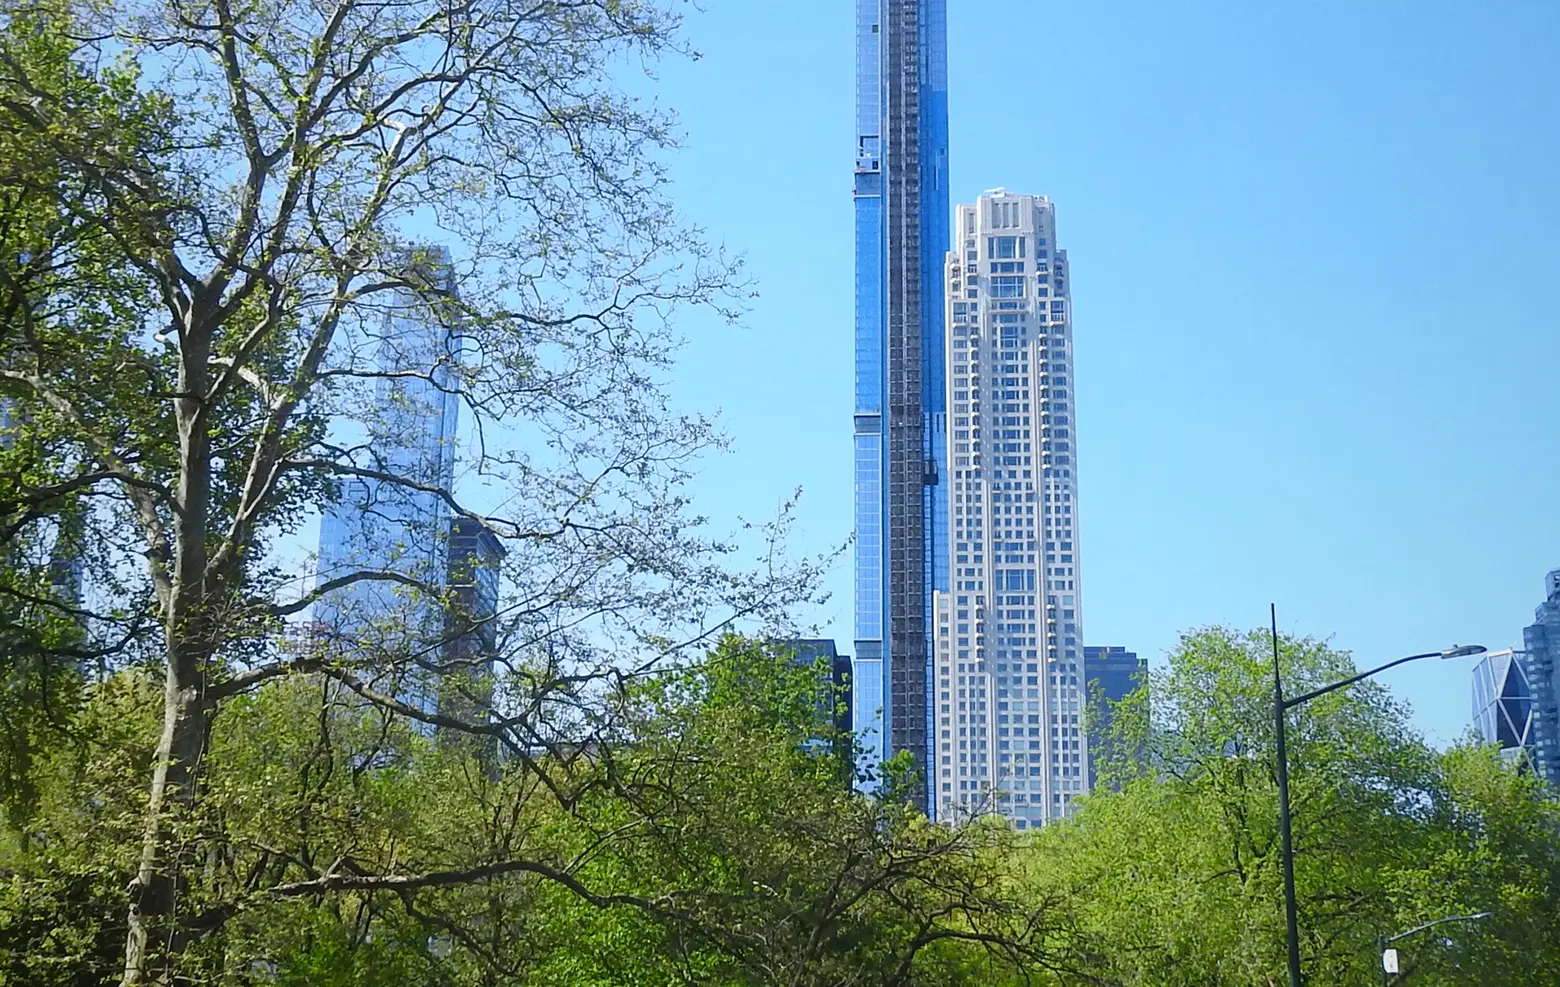 Billionaire Joe Tsai revealed as buyer of $157.5M condos at 220 Central Park South